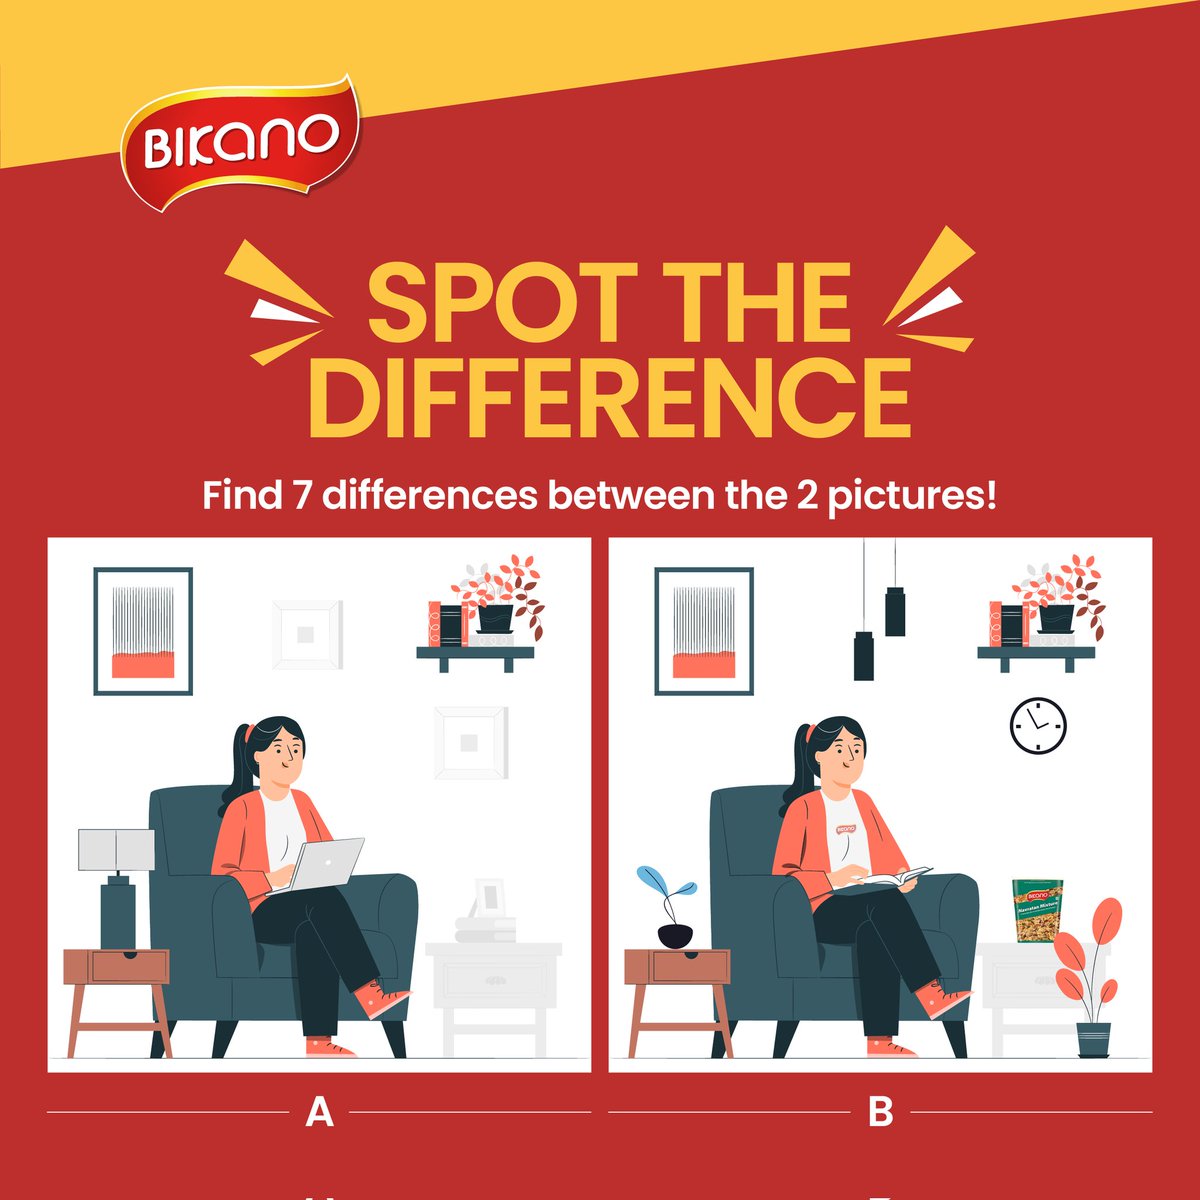 Suna hai, tussi bade sharp ho ji. Spot 7 differences between these two pics, and discover what makes all the difference. #spotthedifference #puzzle #difference #mindgame #bhujia #aloobhujia #namkeen #snacks #snacklovers #bikano #BarsonSeBikano